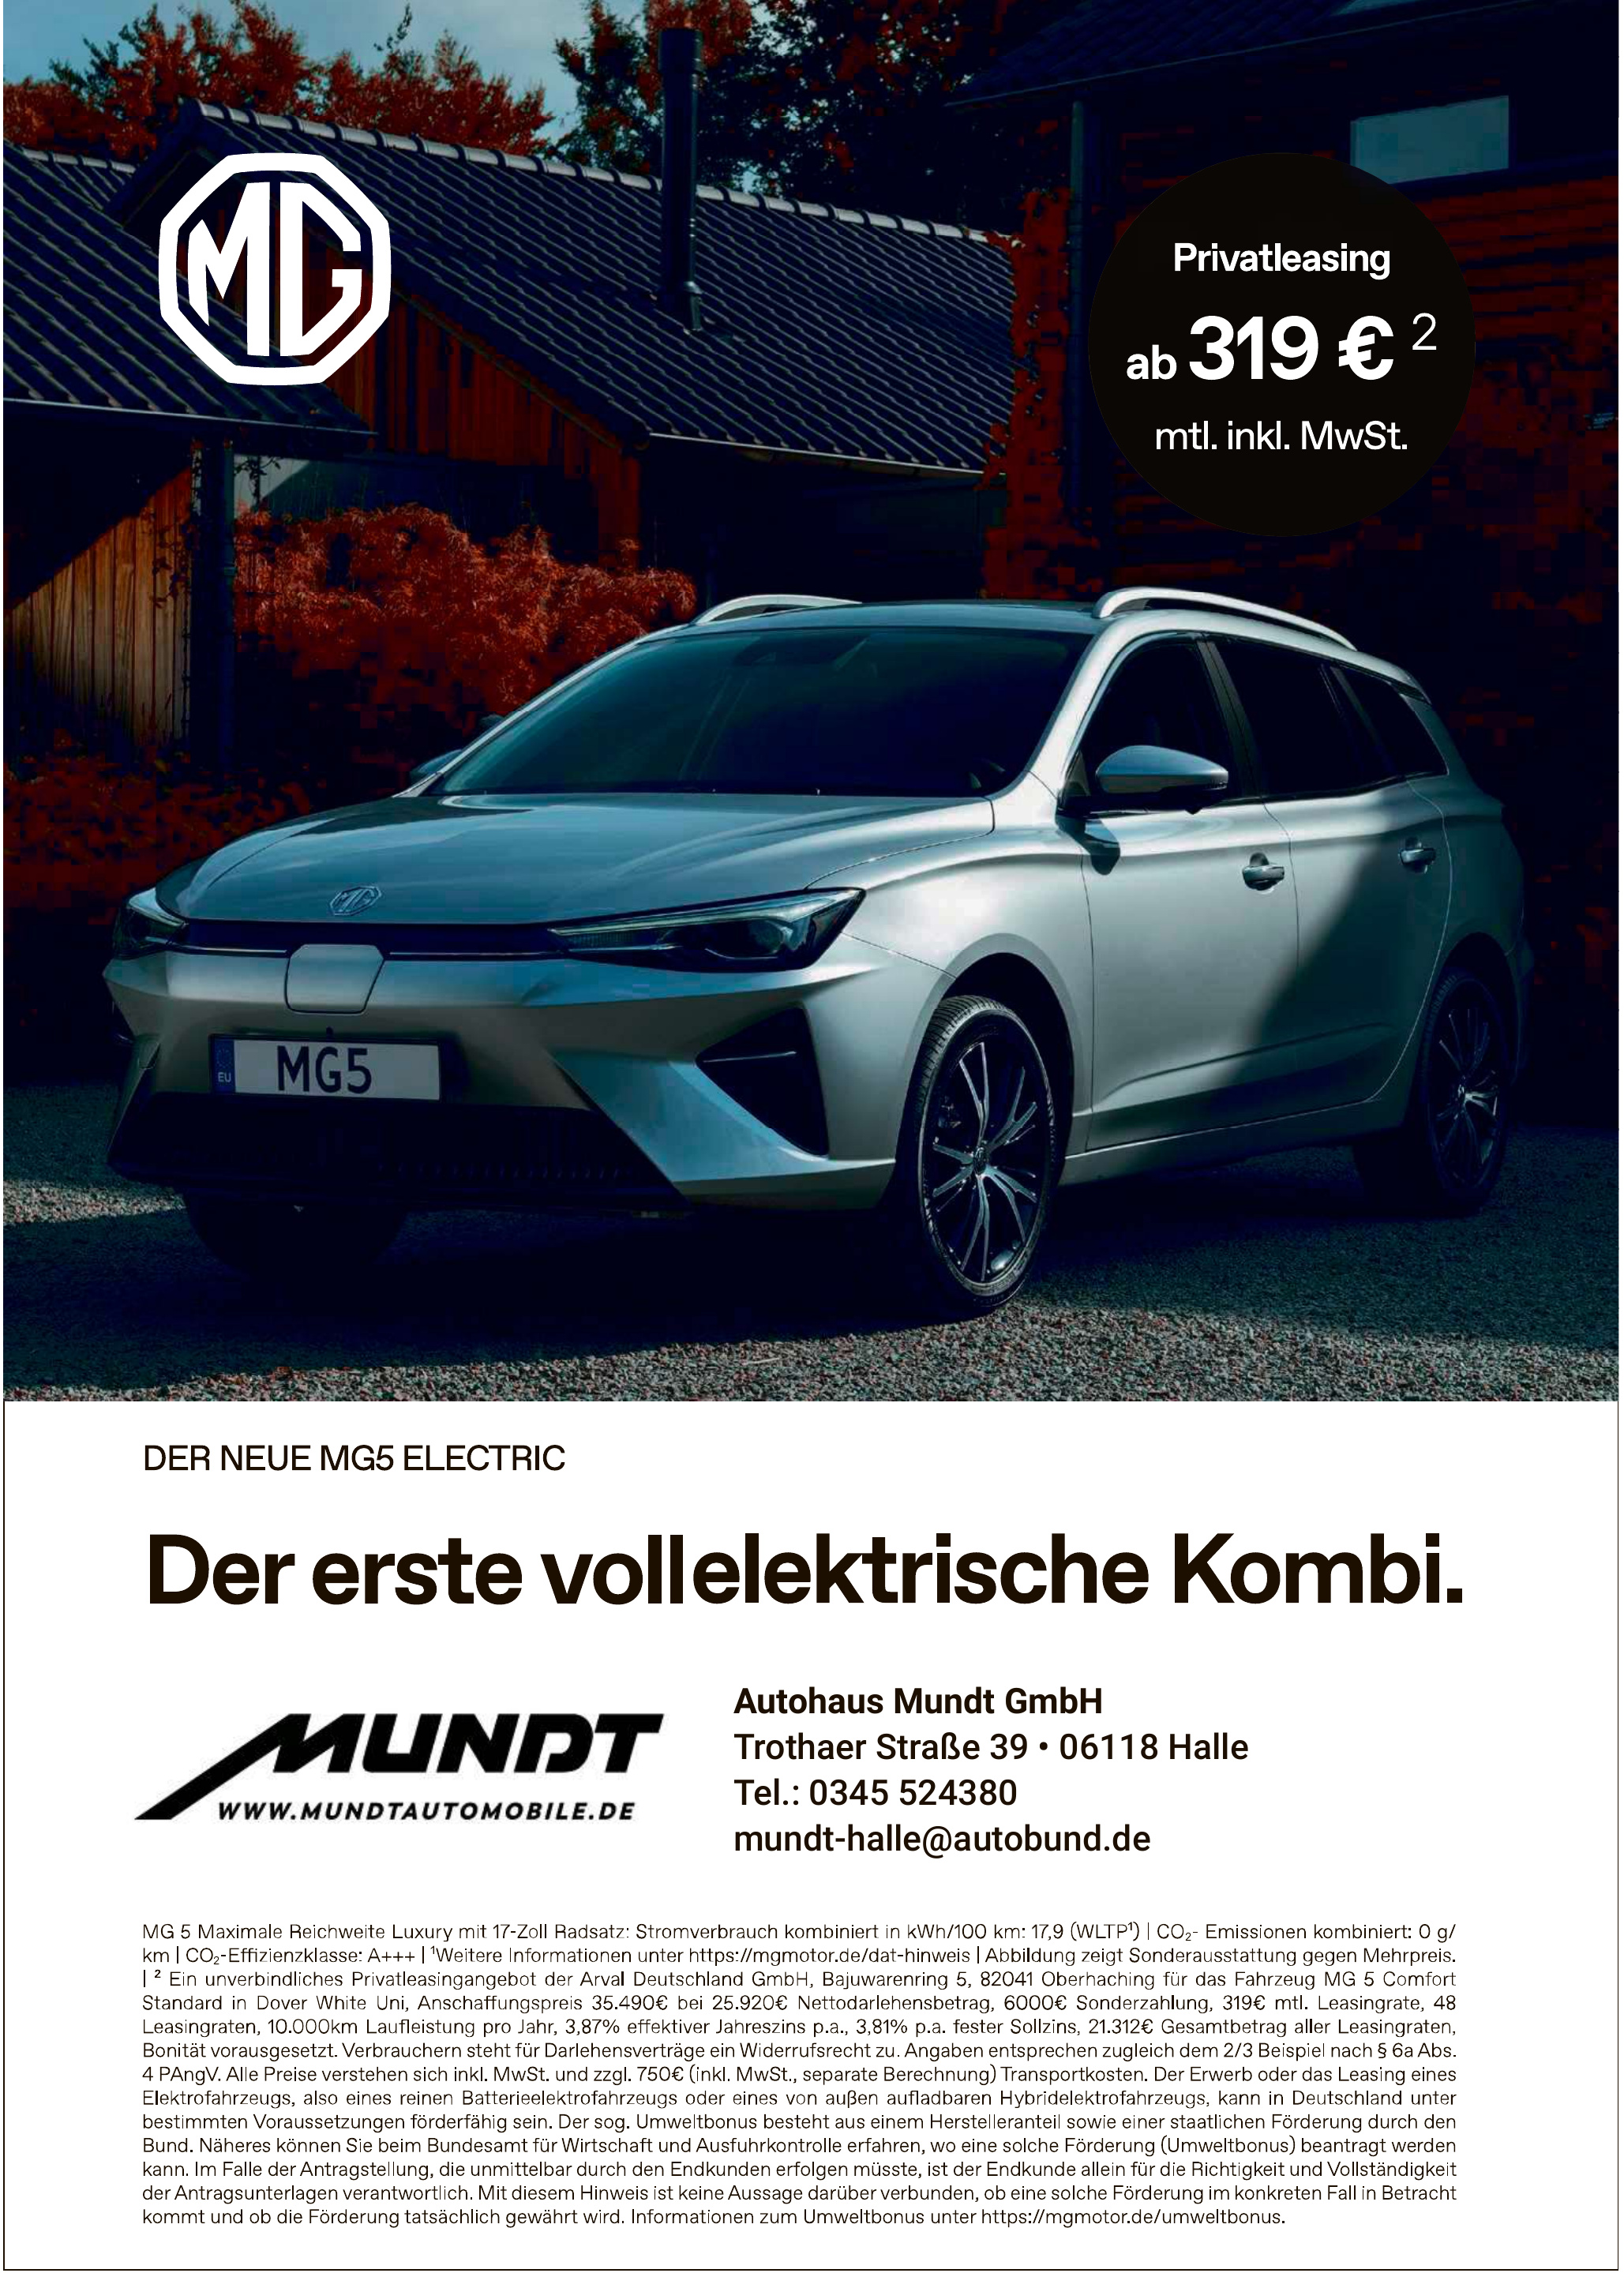 Autohaus Mundt GmbH